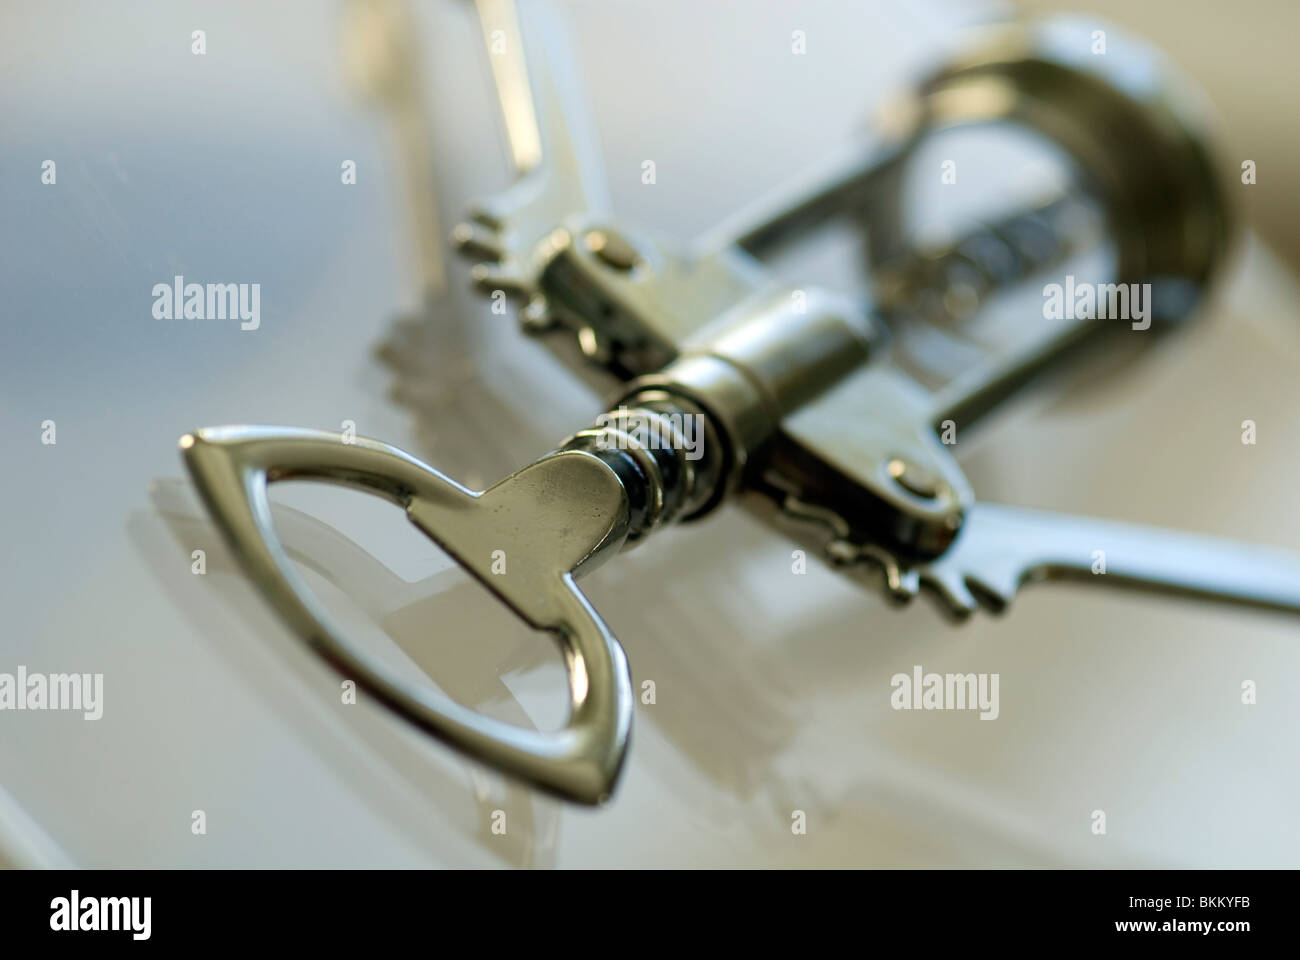 close up image of a metal corkscrew Stock Photo